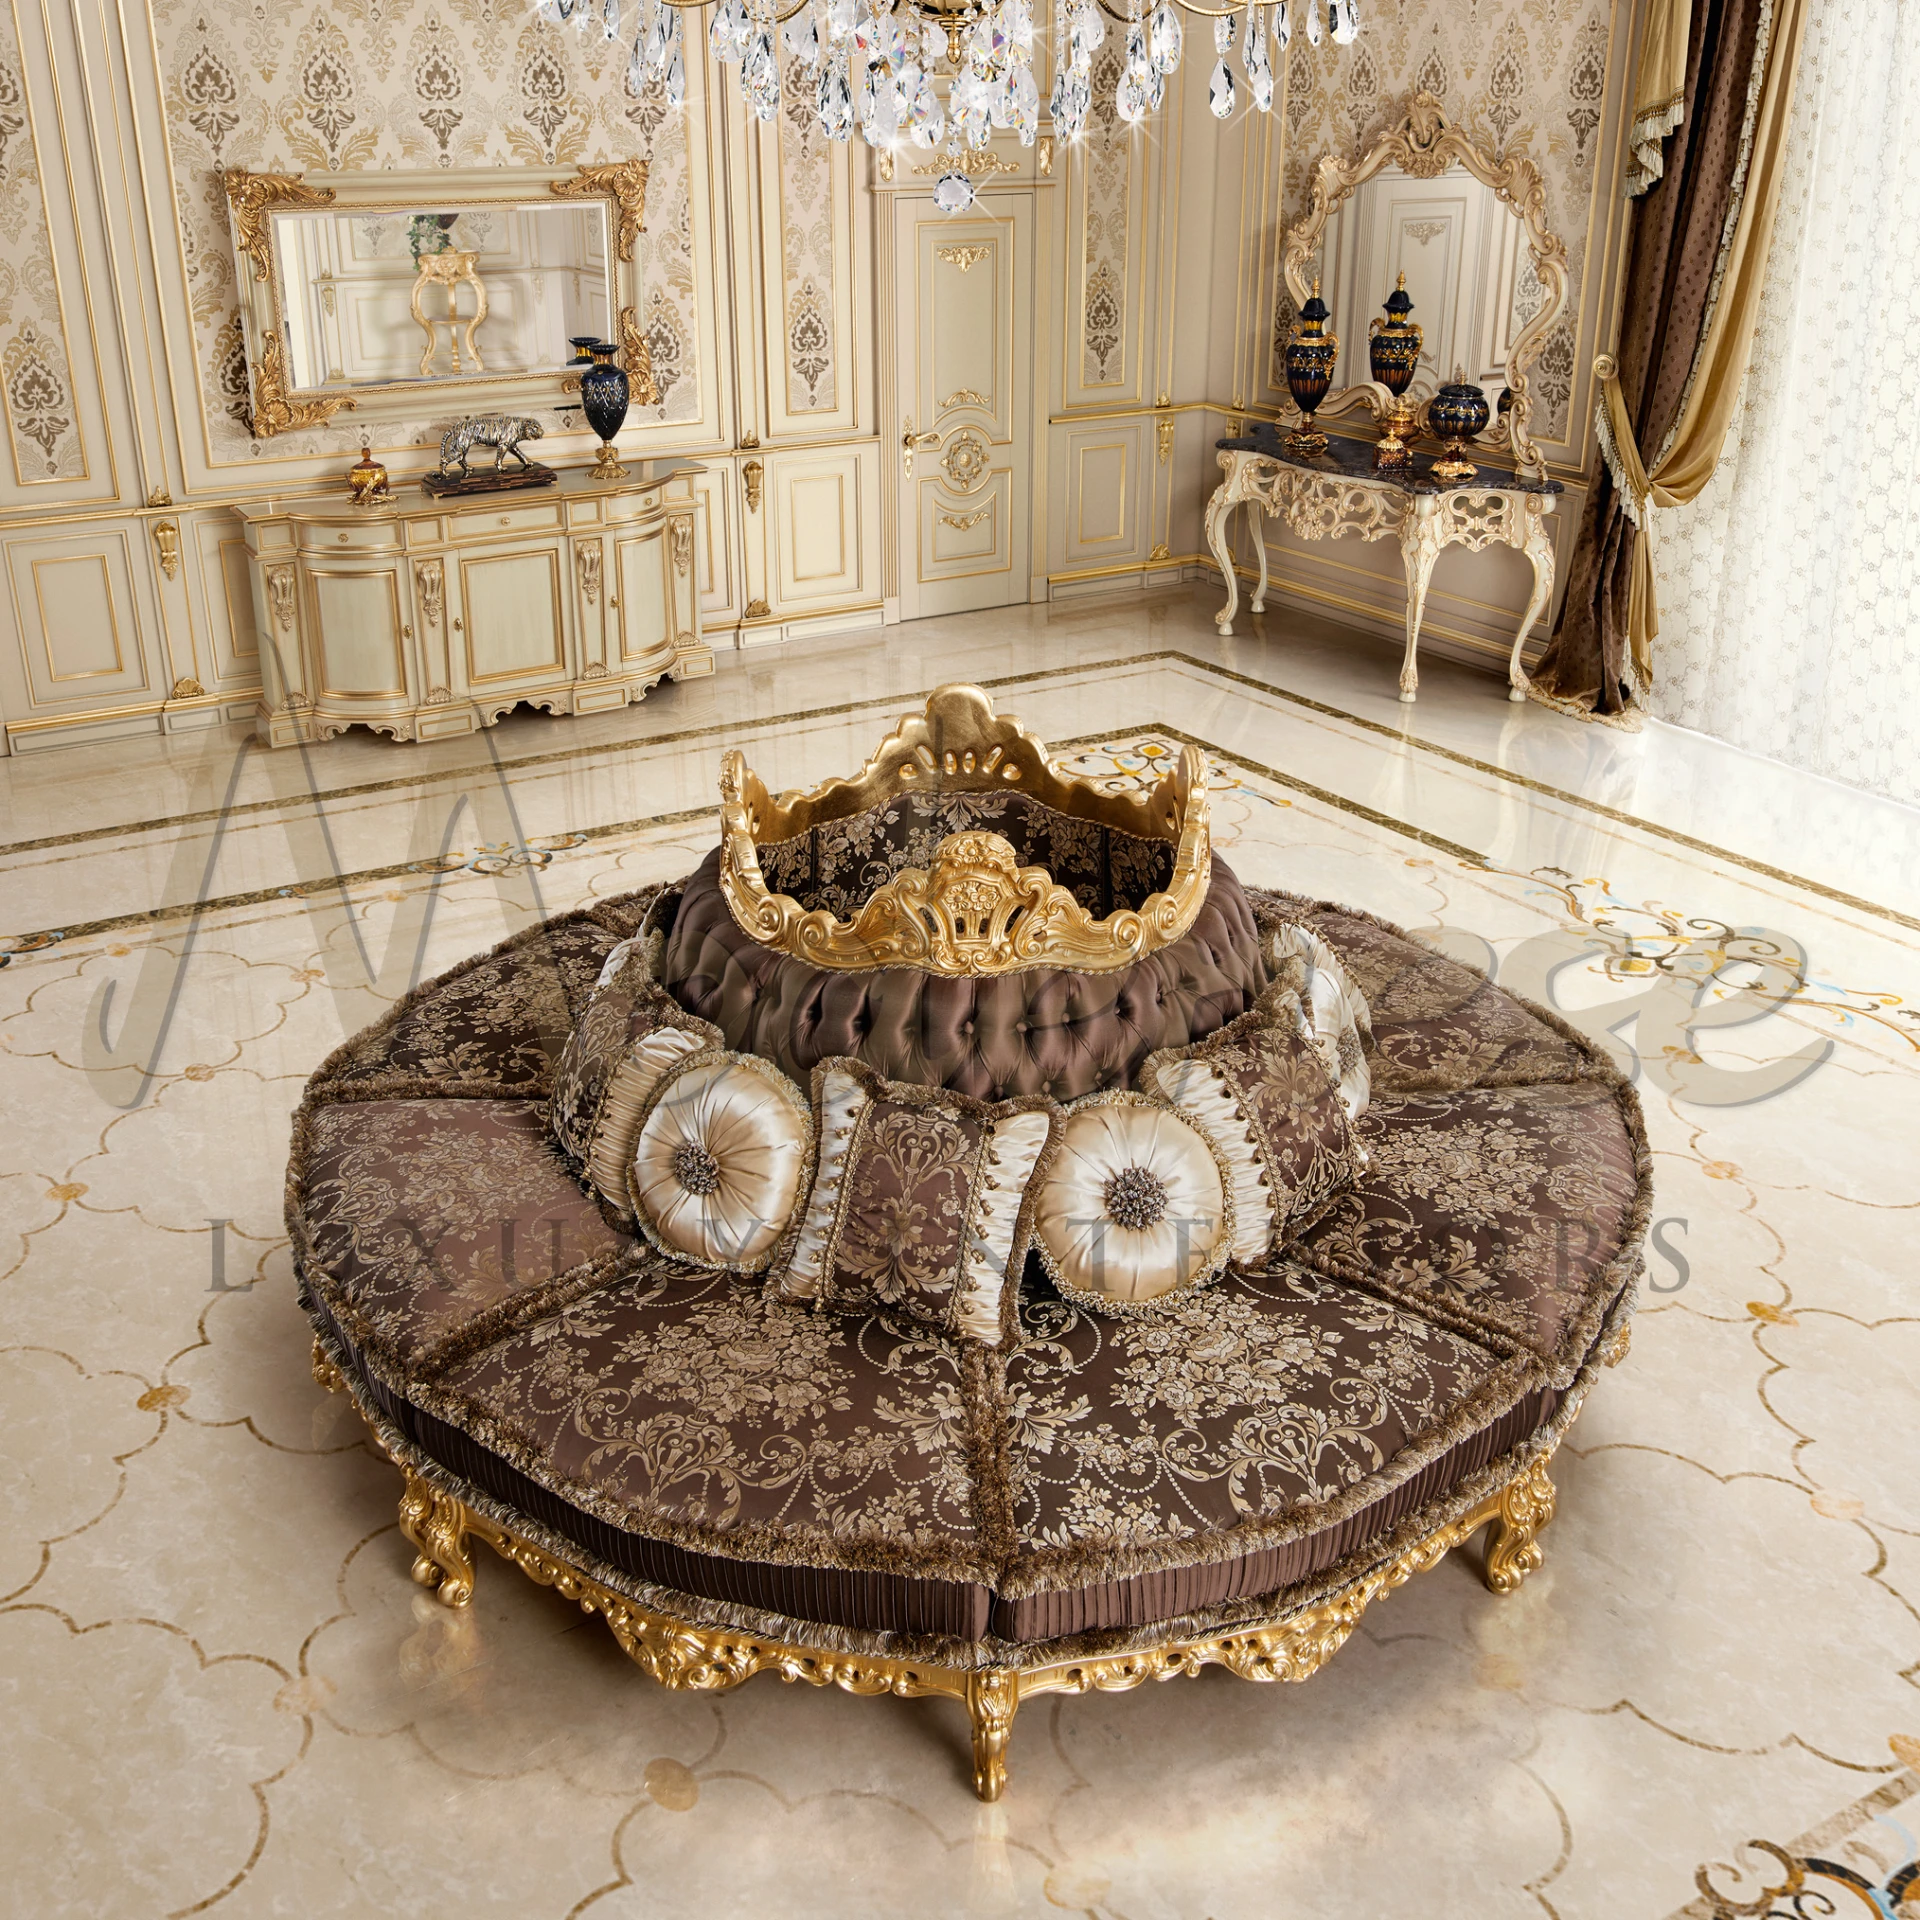 Luxurious Round Sofa in Victorian style, featuring exquisite Italian fabric and feminine design for elegant settings.